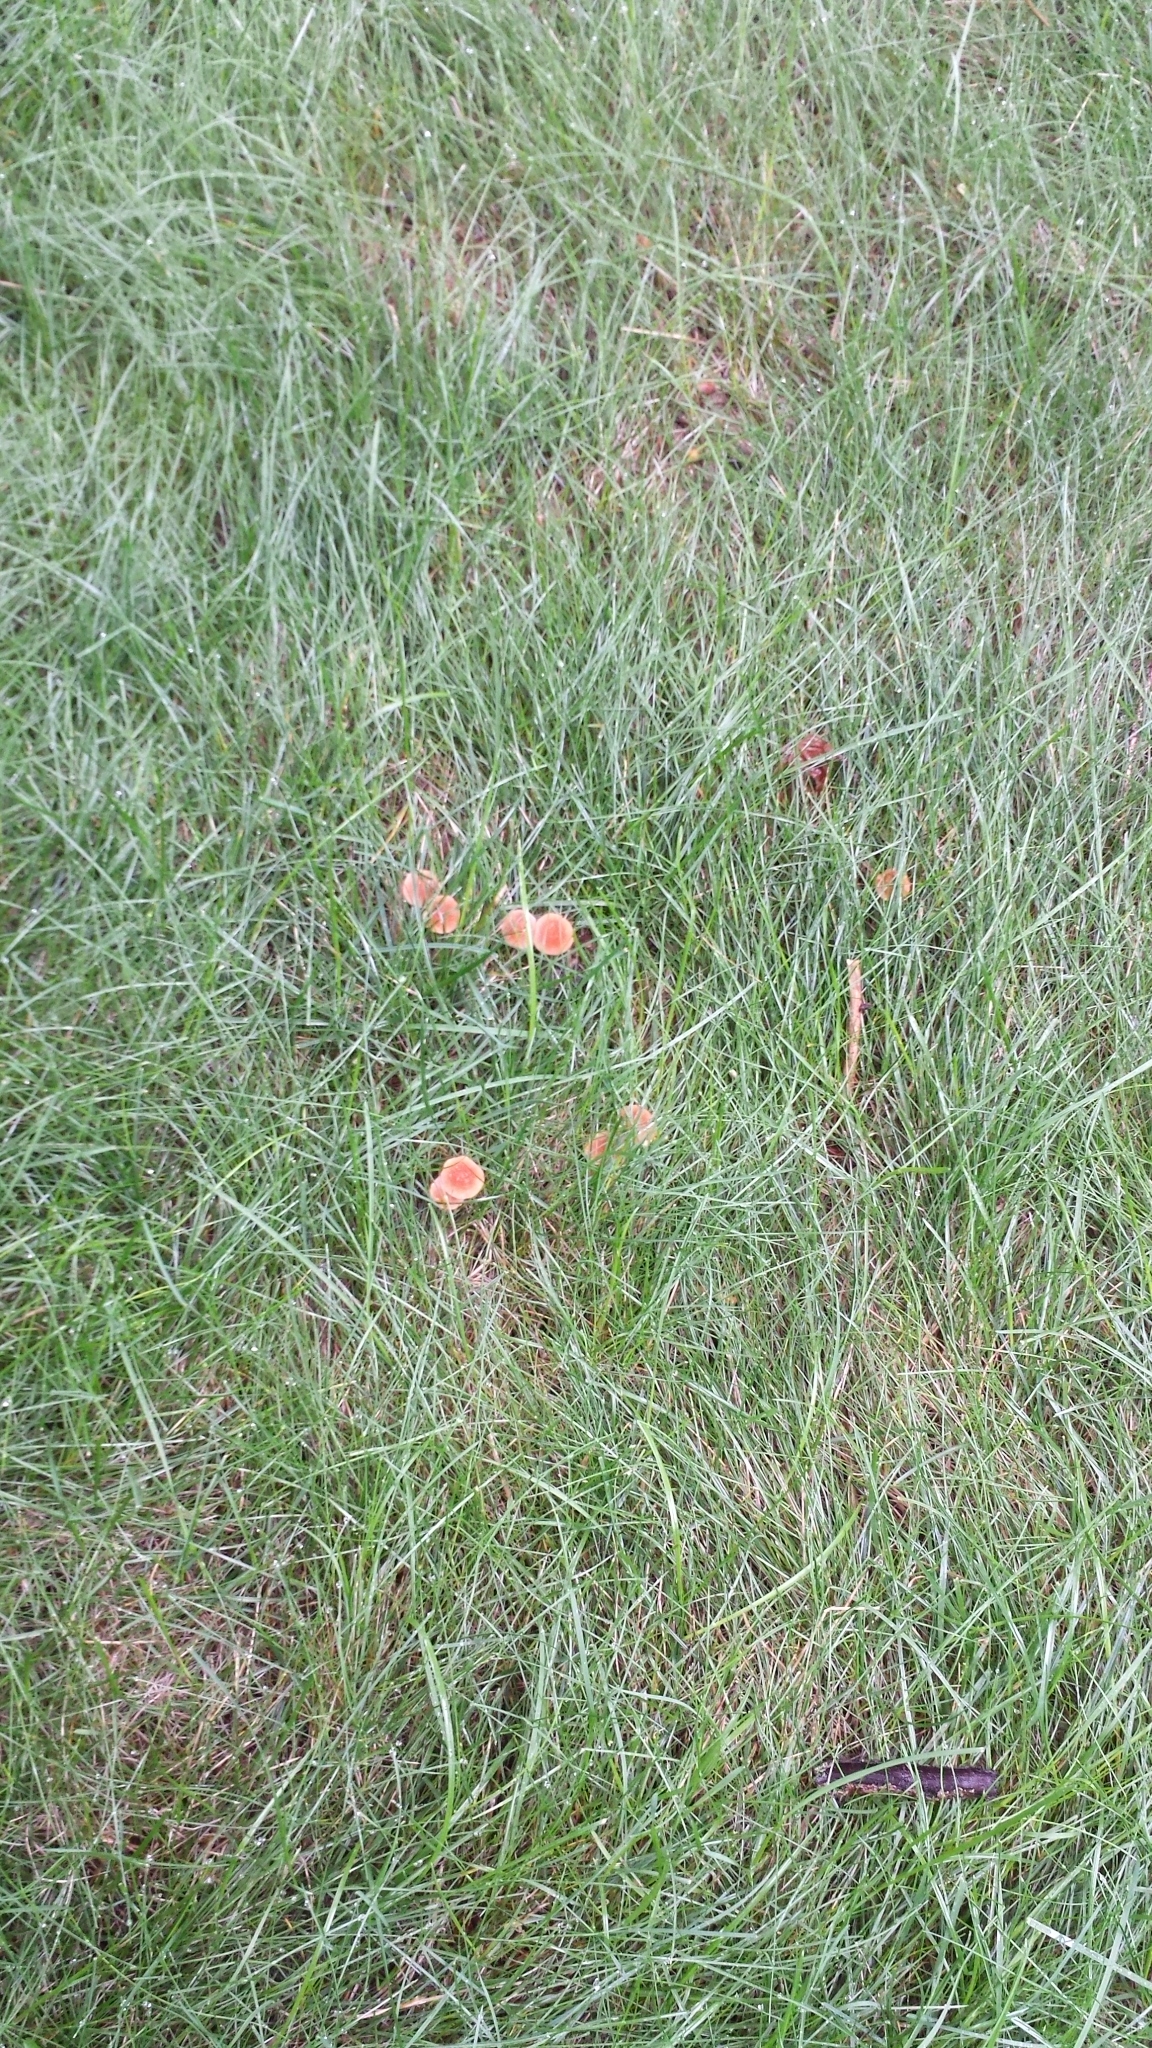 20180812_072454 gnome grove mushrooms